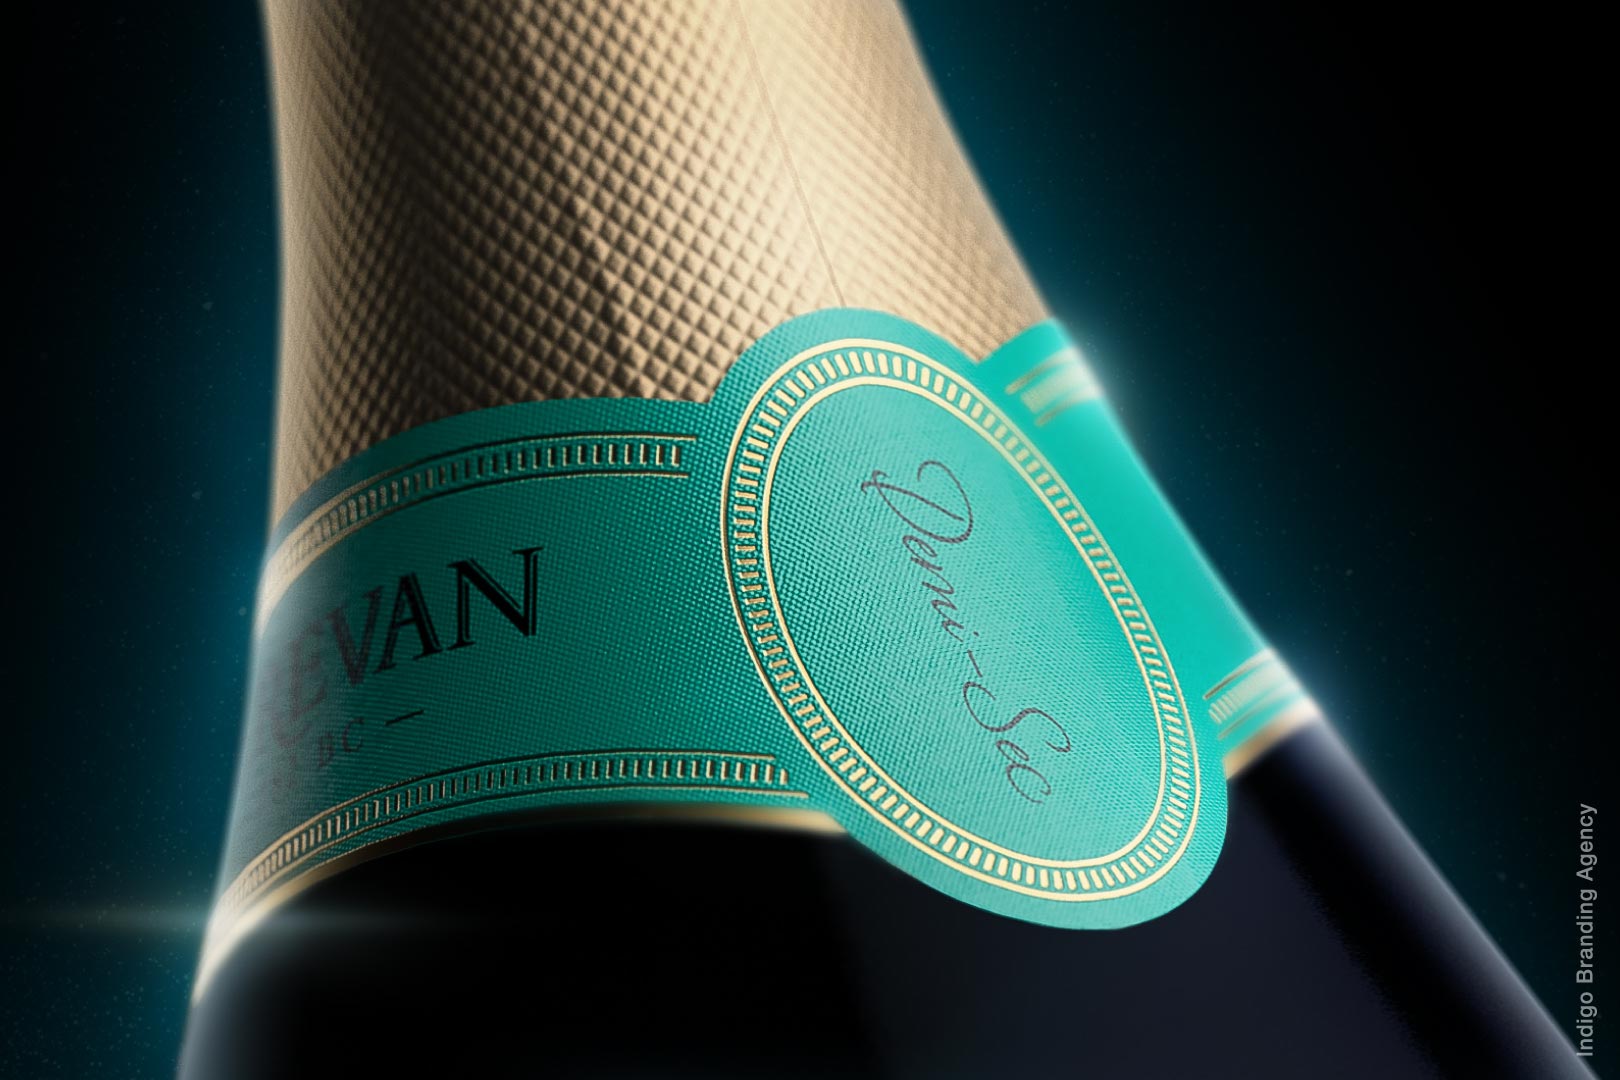 Yerevan Sparkling Wine branding and labeling design by Indigo branding